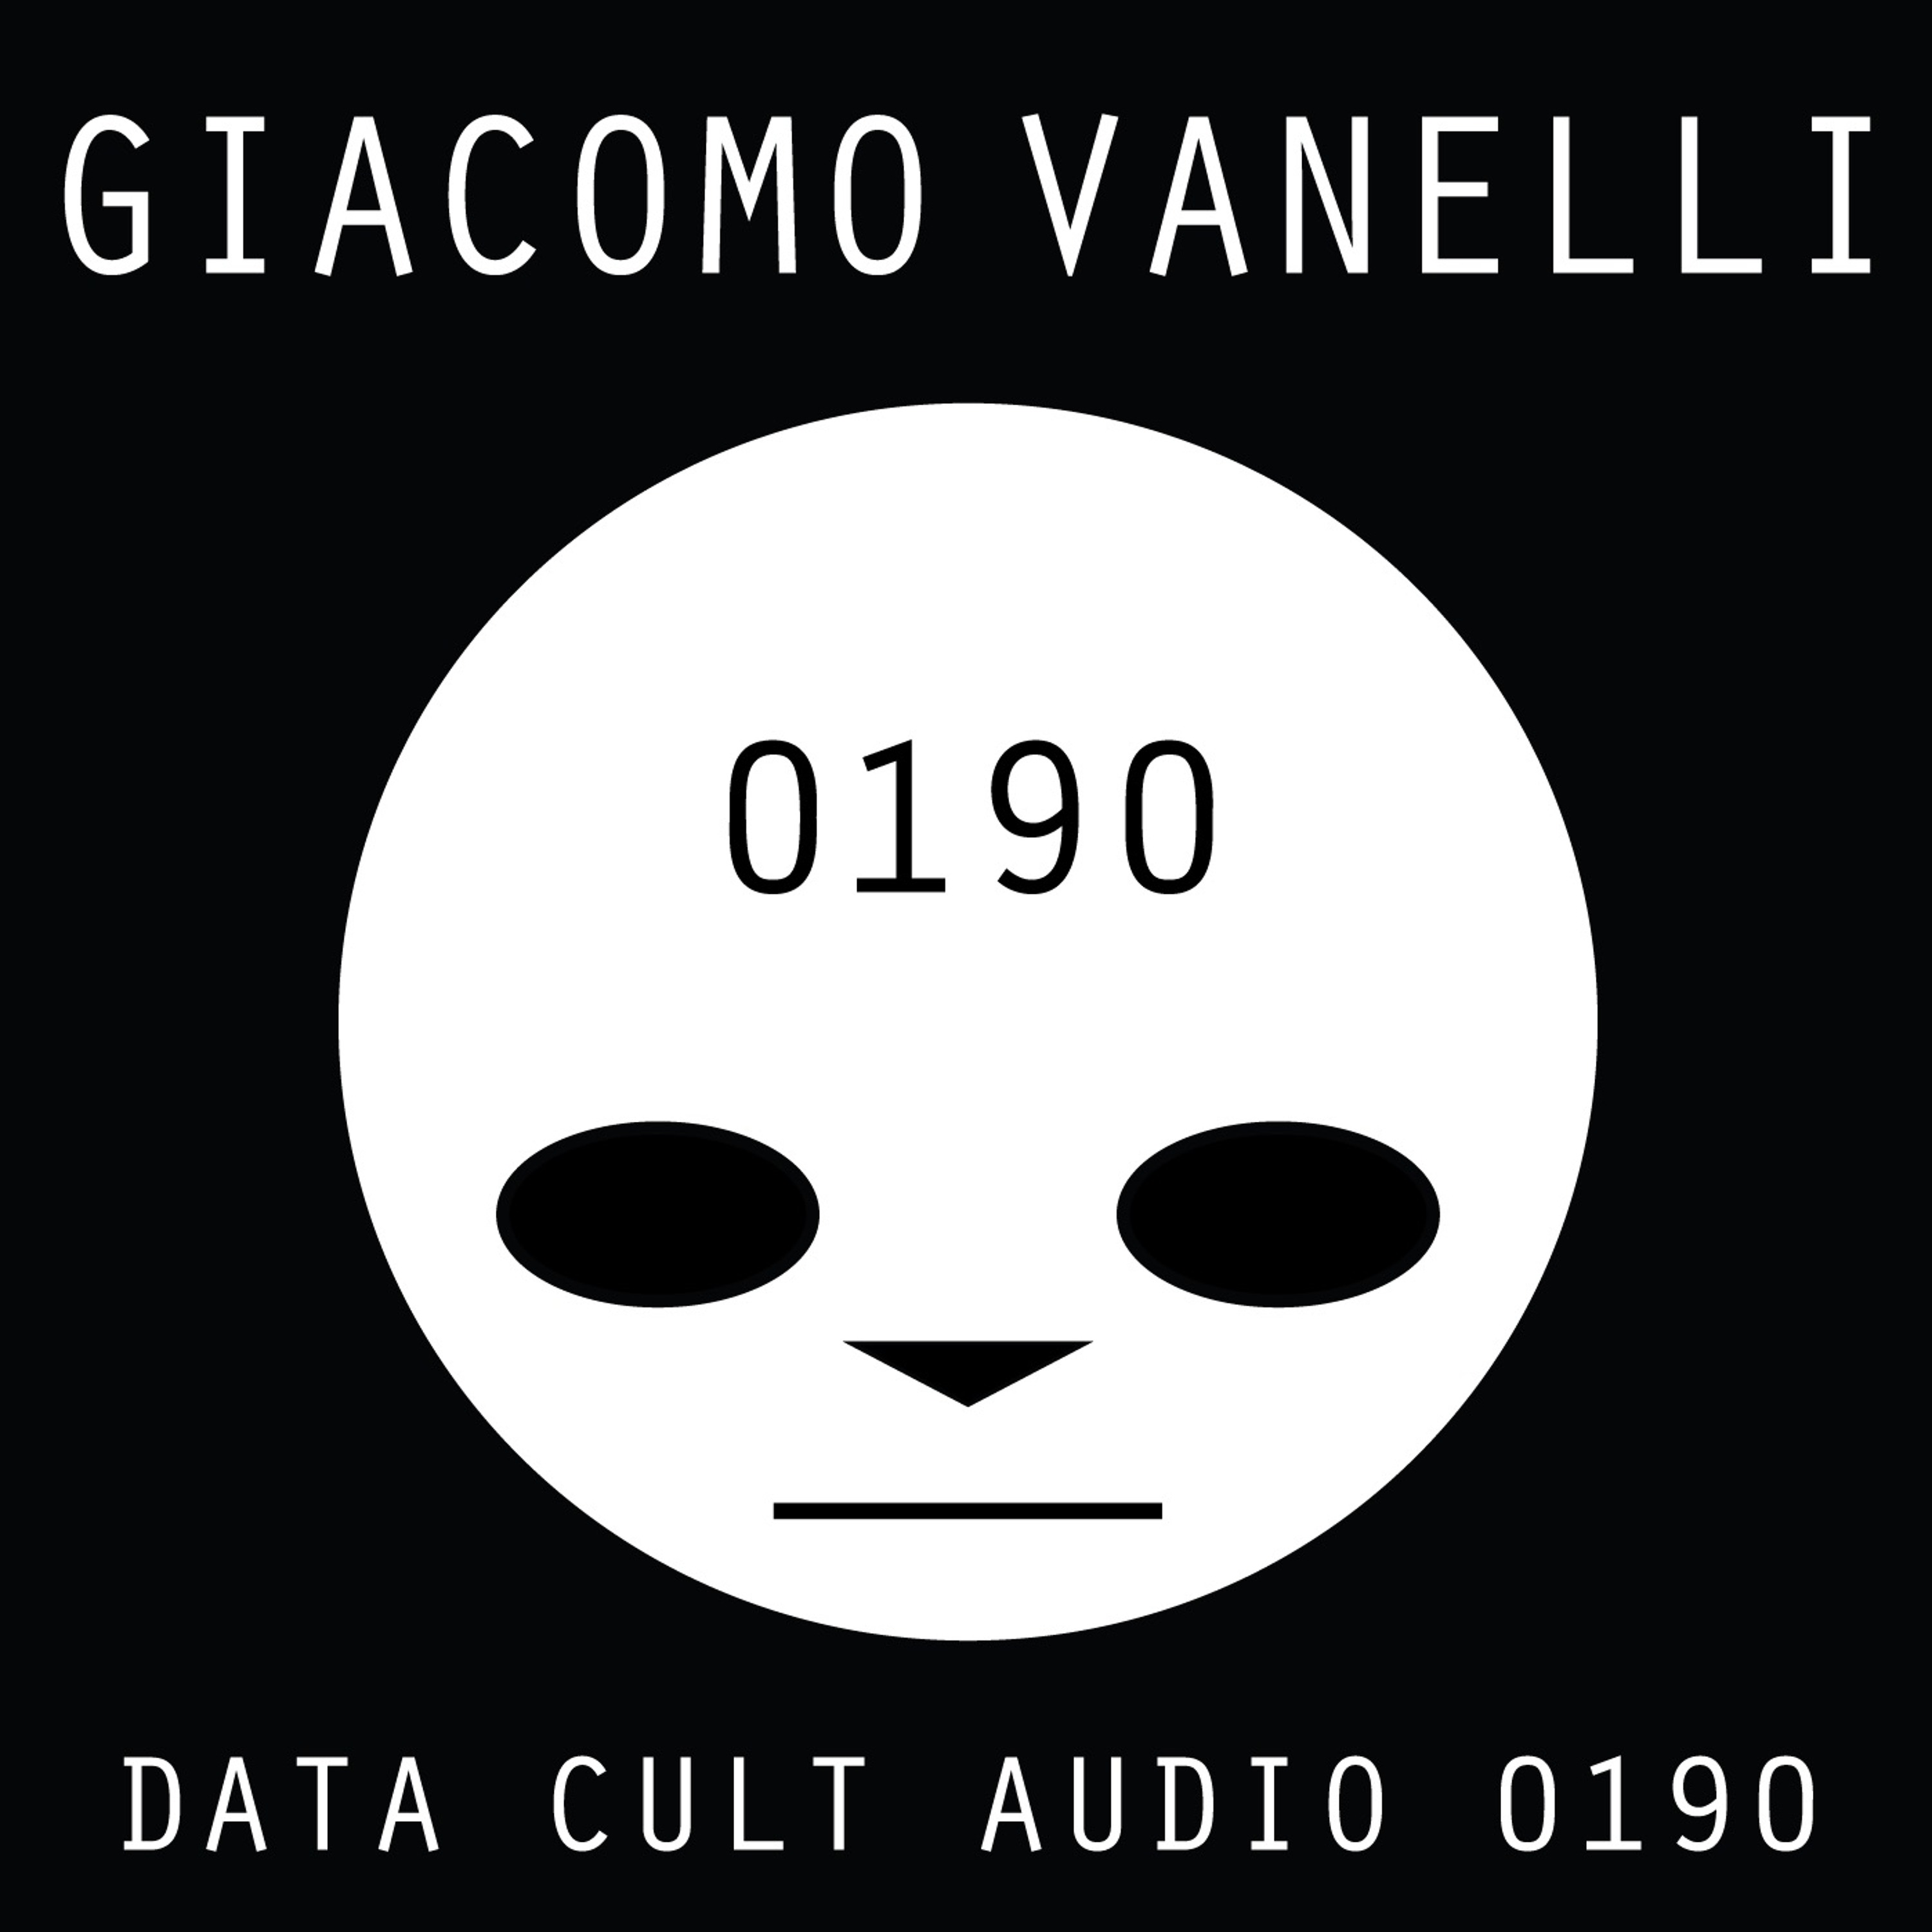 Data Cult Audio 0190 - Giacomo Vanelli